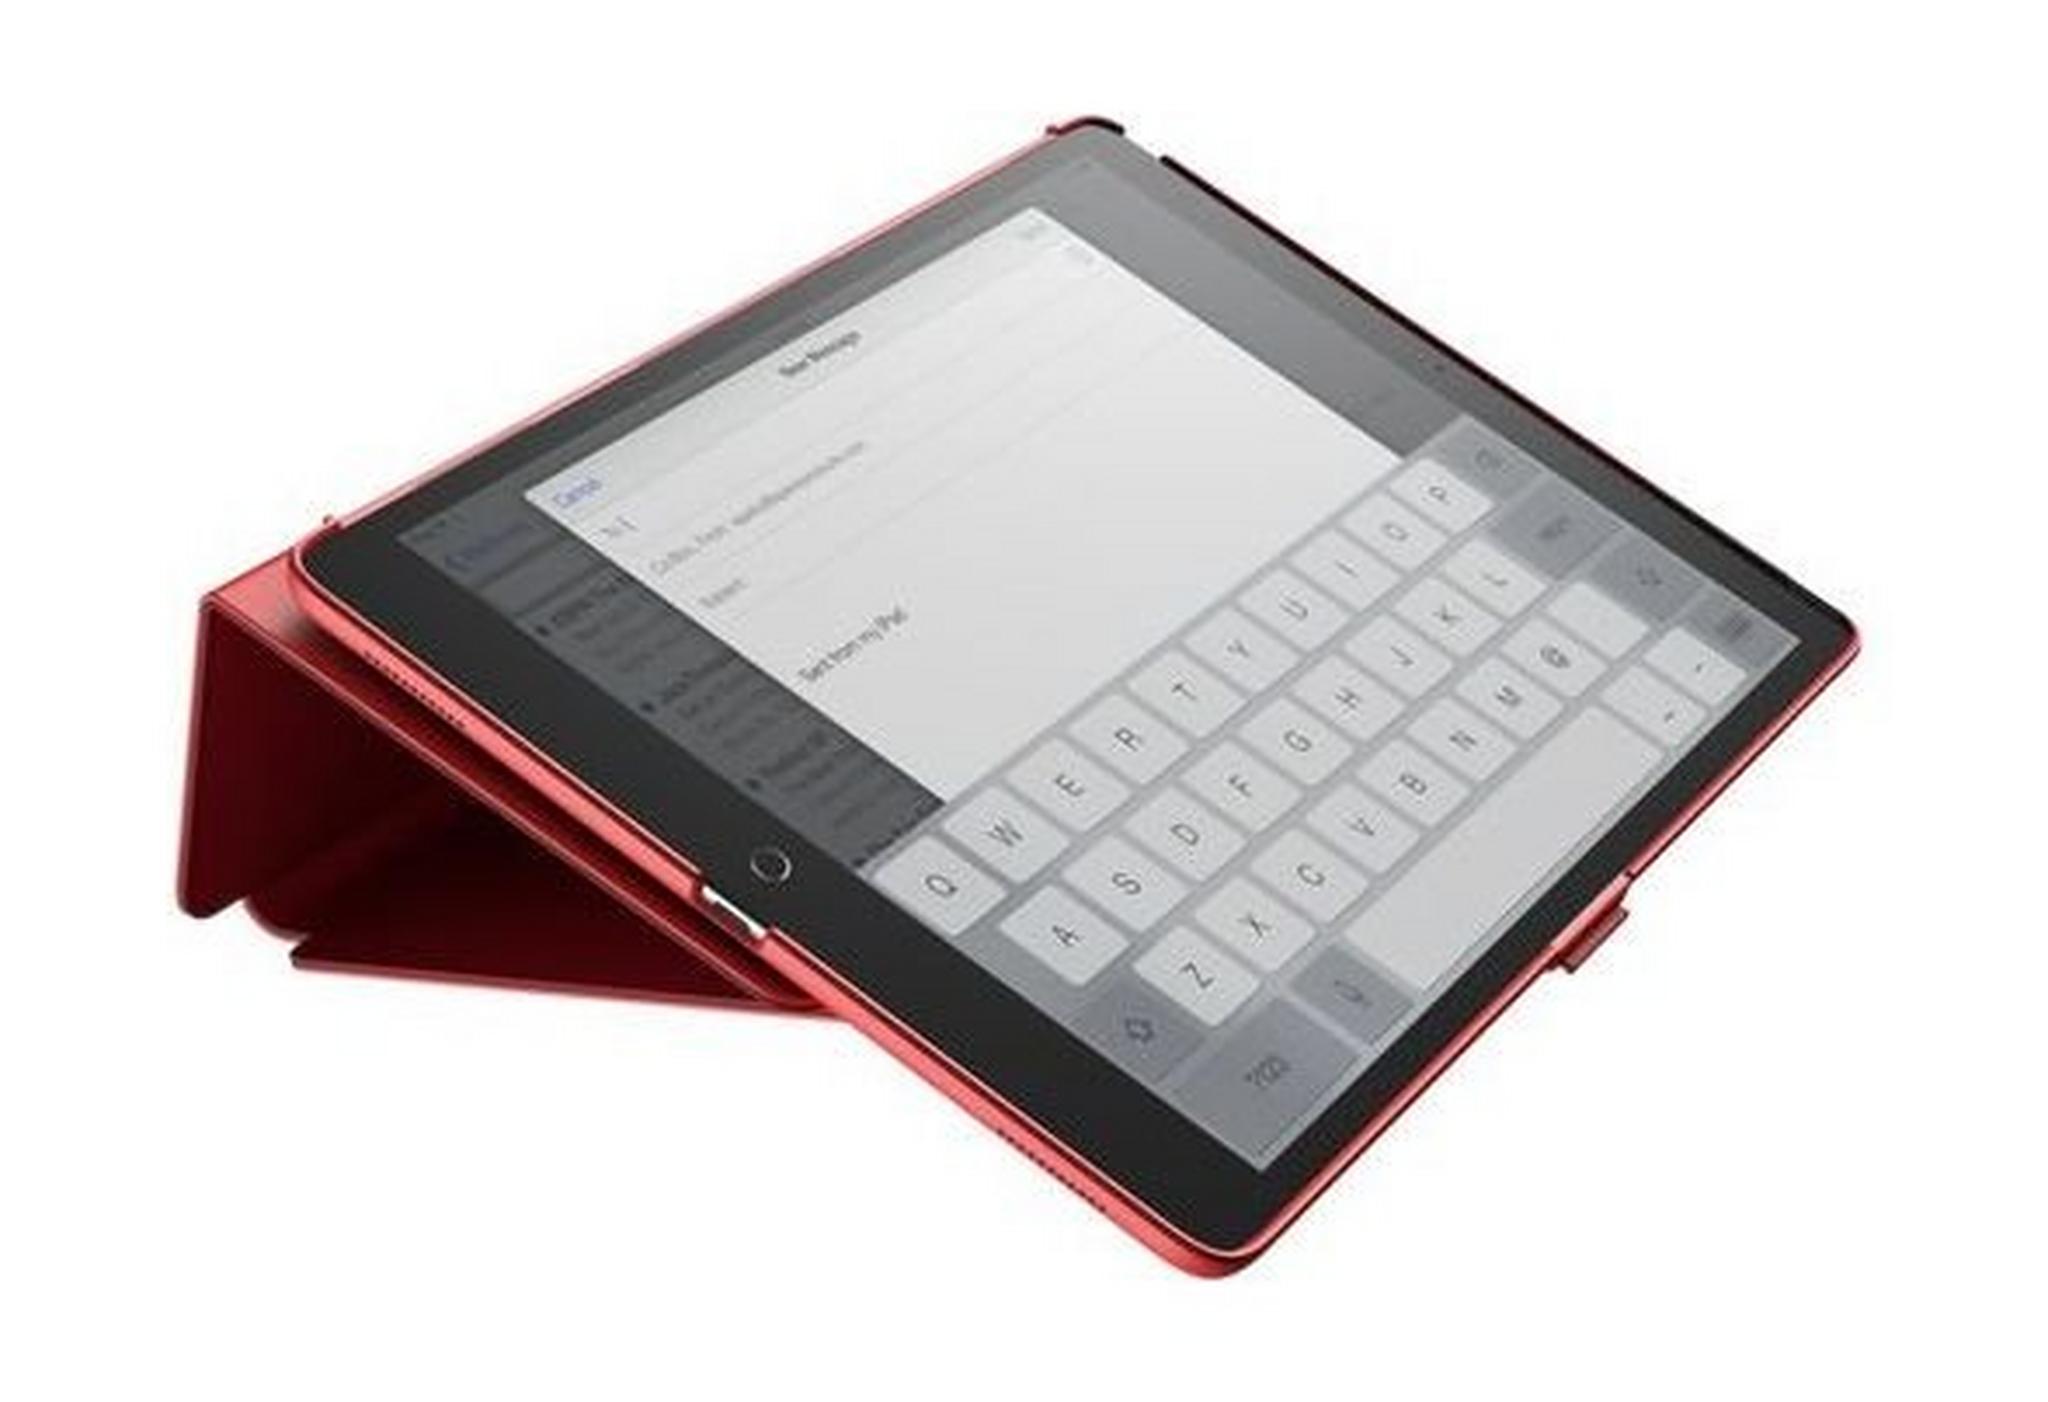 Speck Balance Folio Case for iPad Pro 10.5-Inch (91905-6055) - Dark Poppy Red